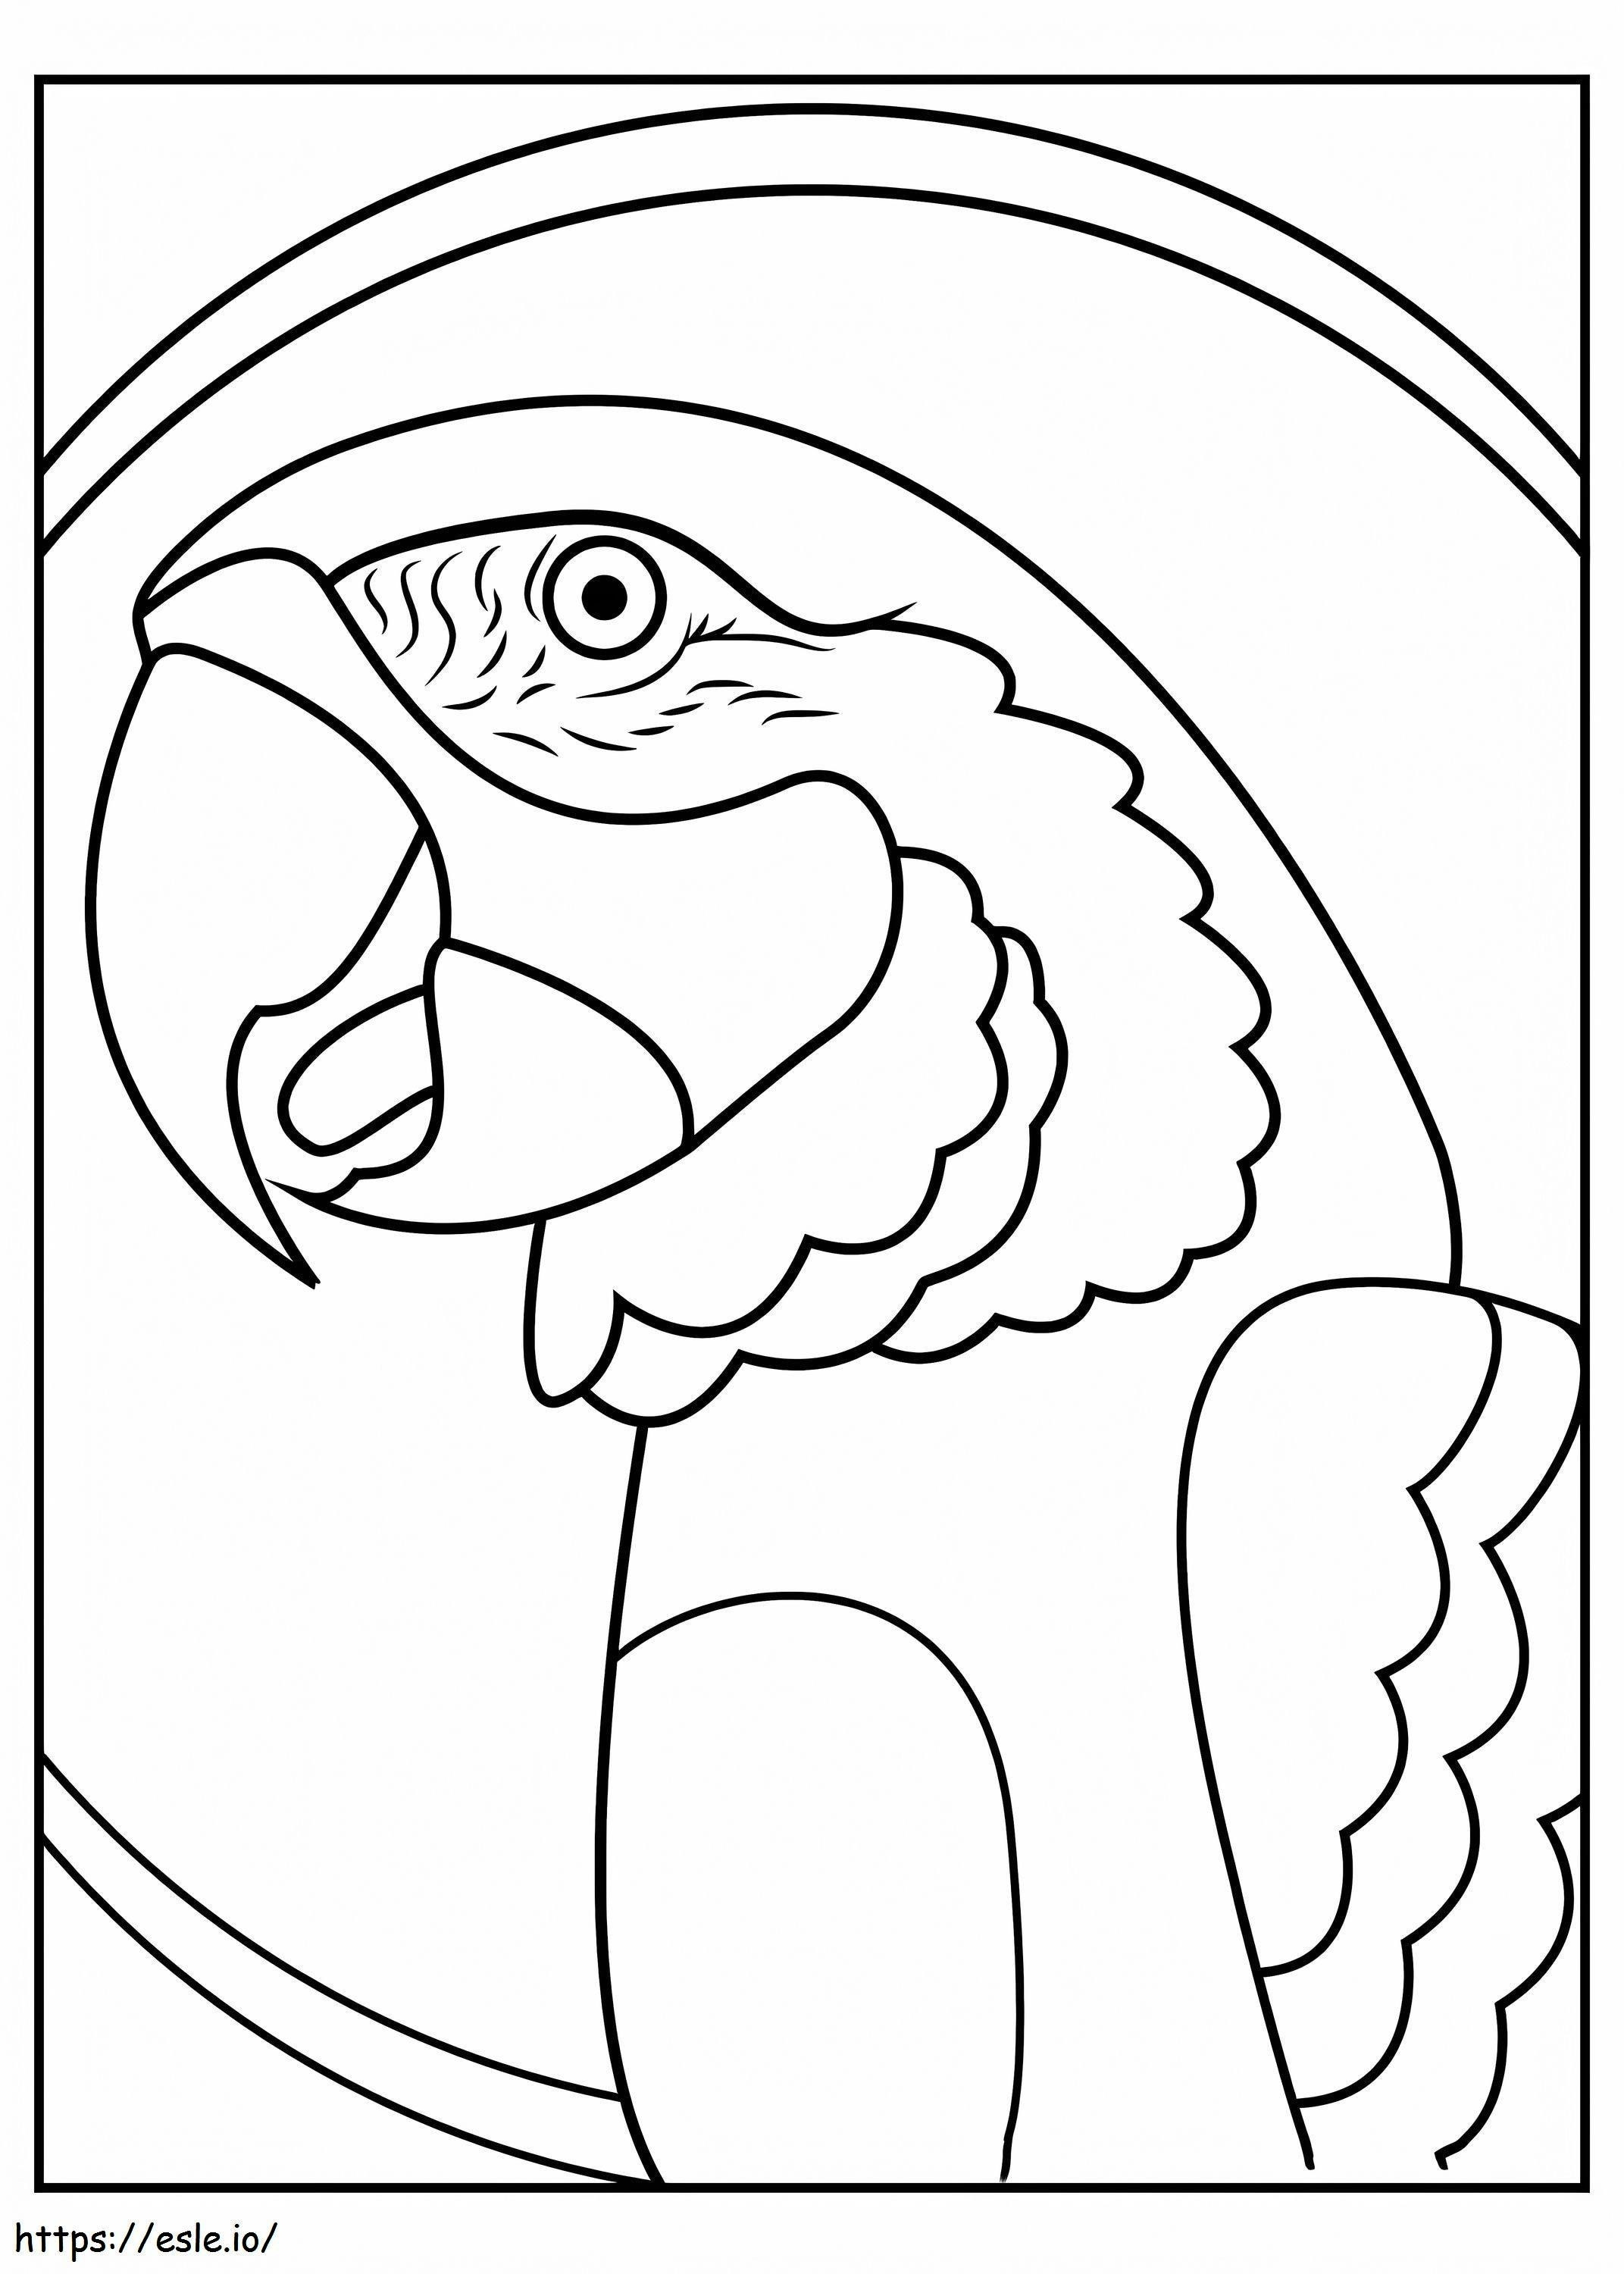 Portret papugi kolorowanka